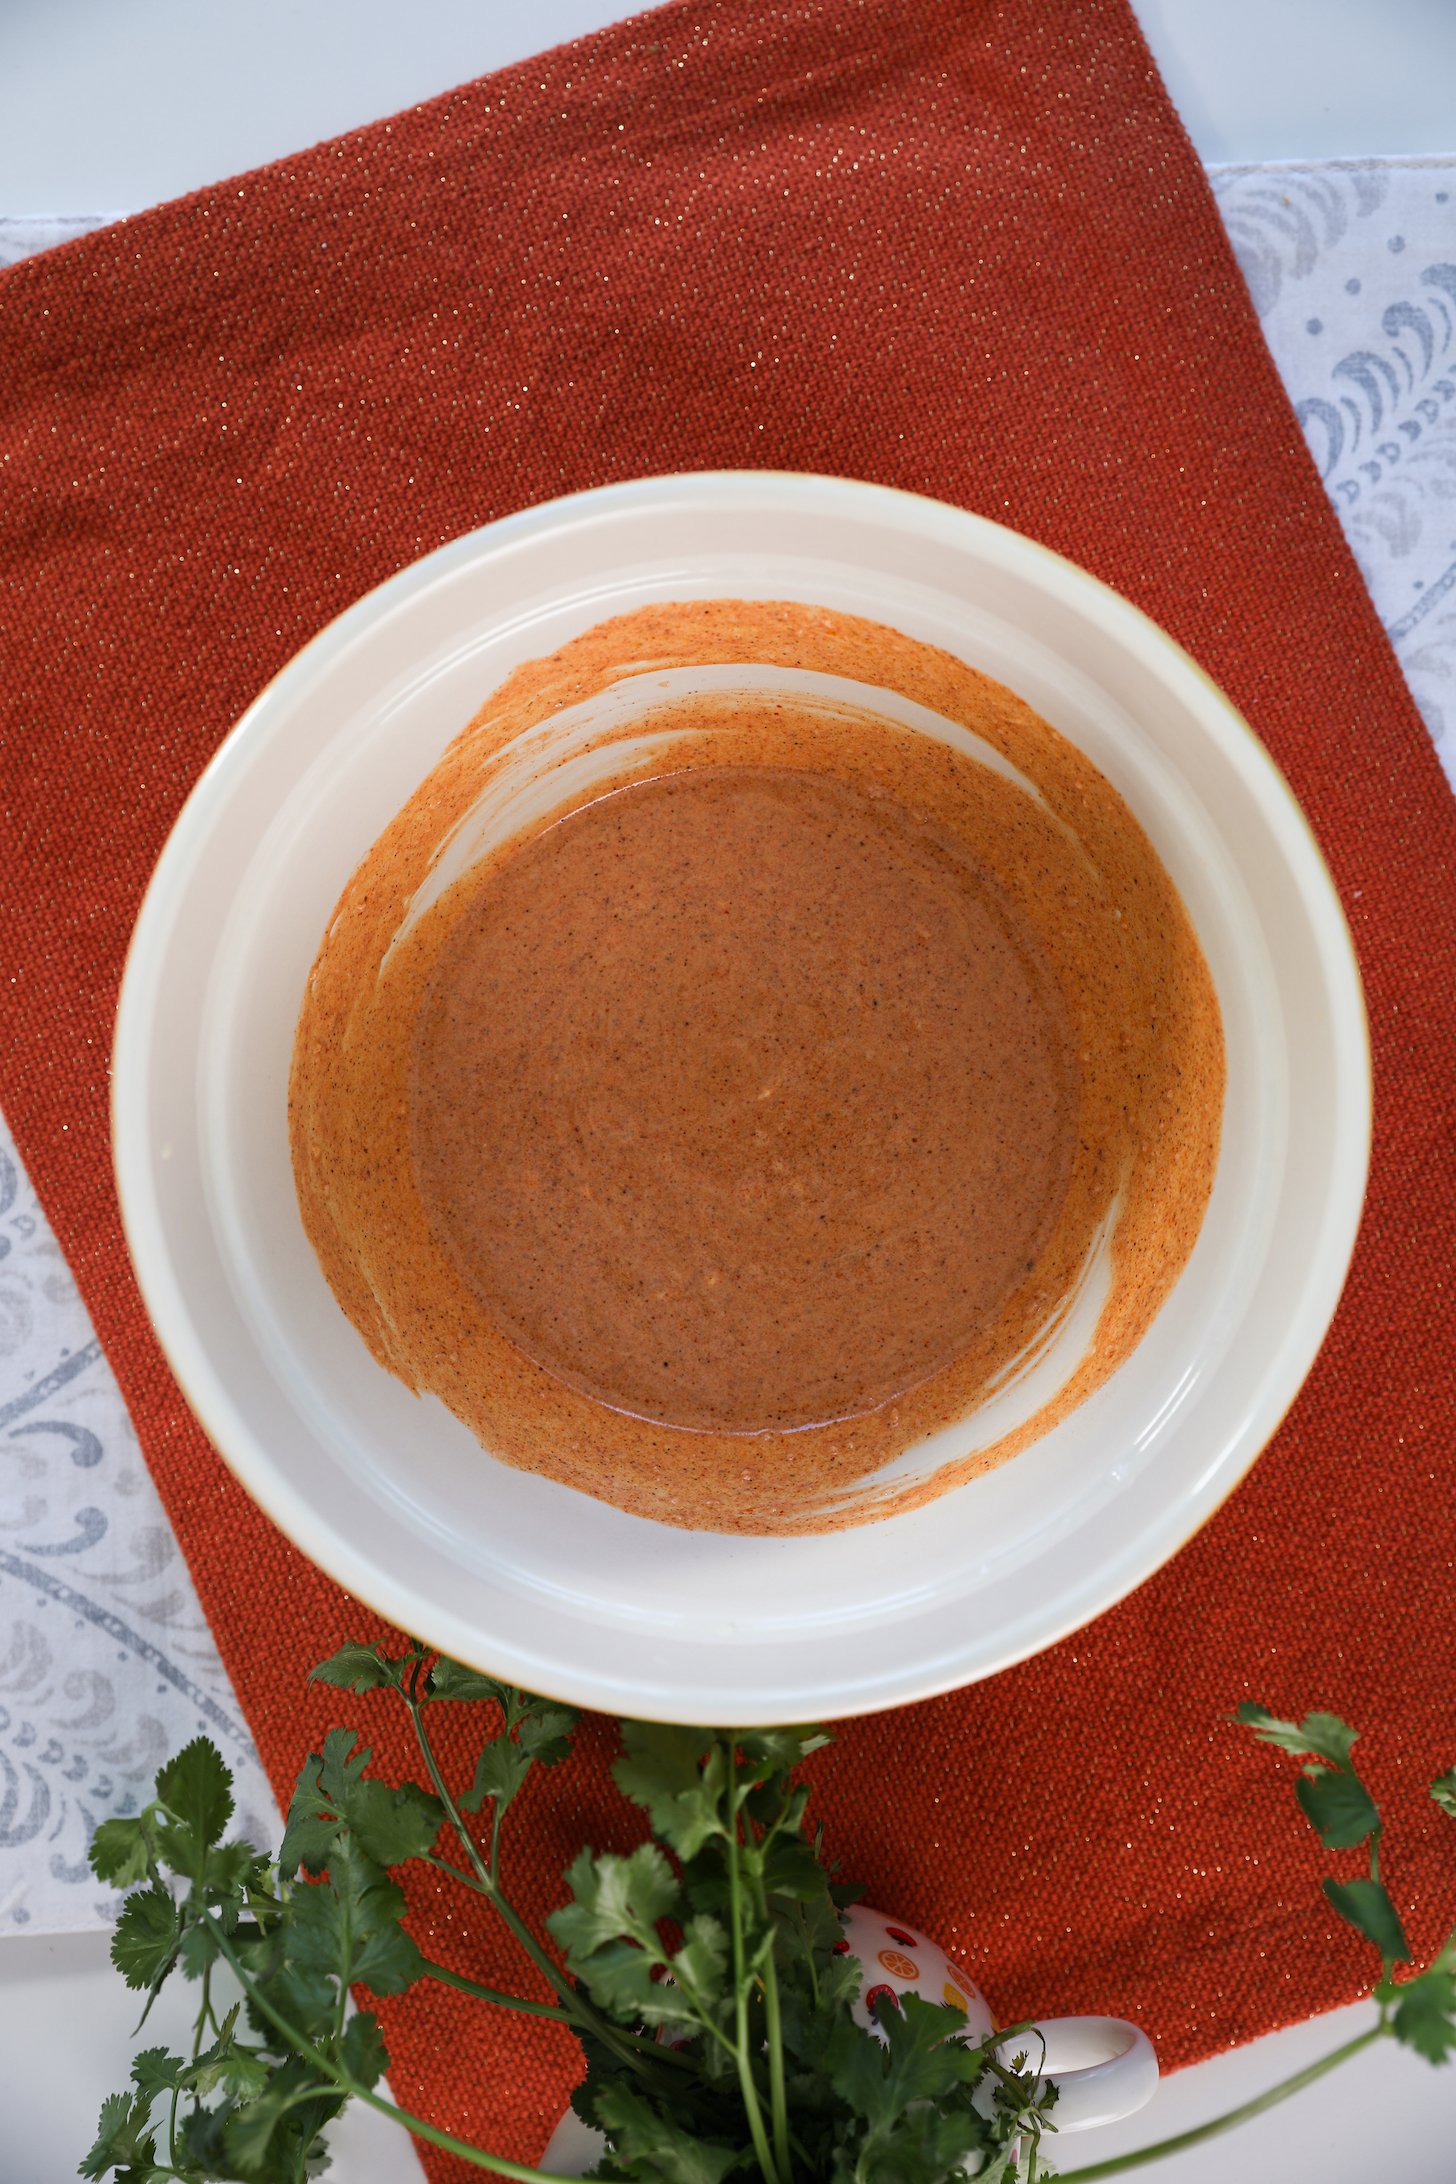 A bowl containing an orange marinade sits on an orange mat.